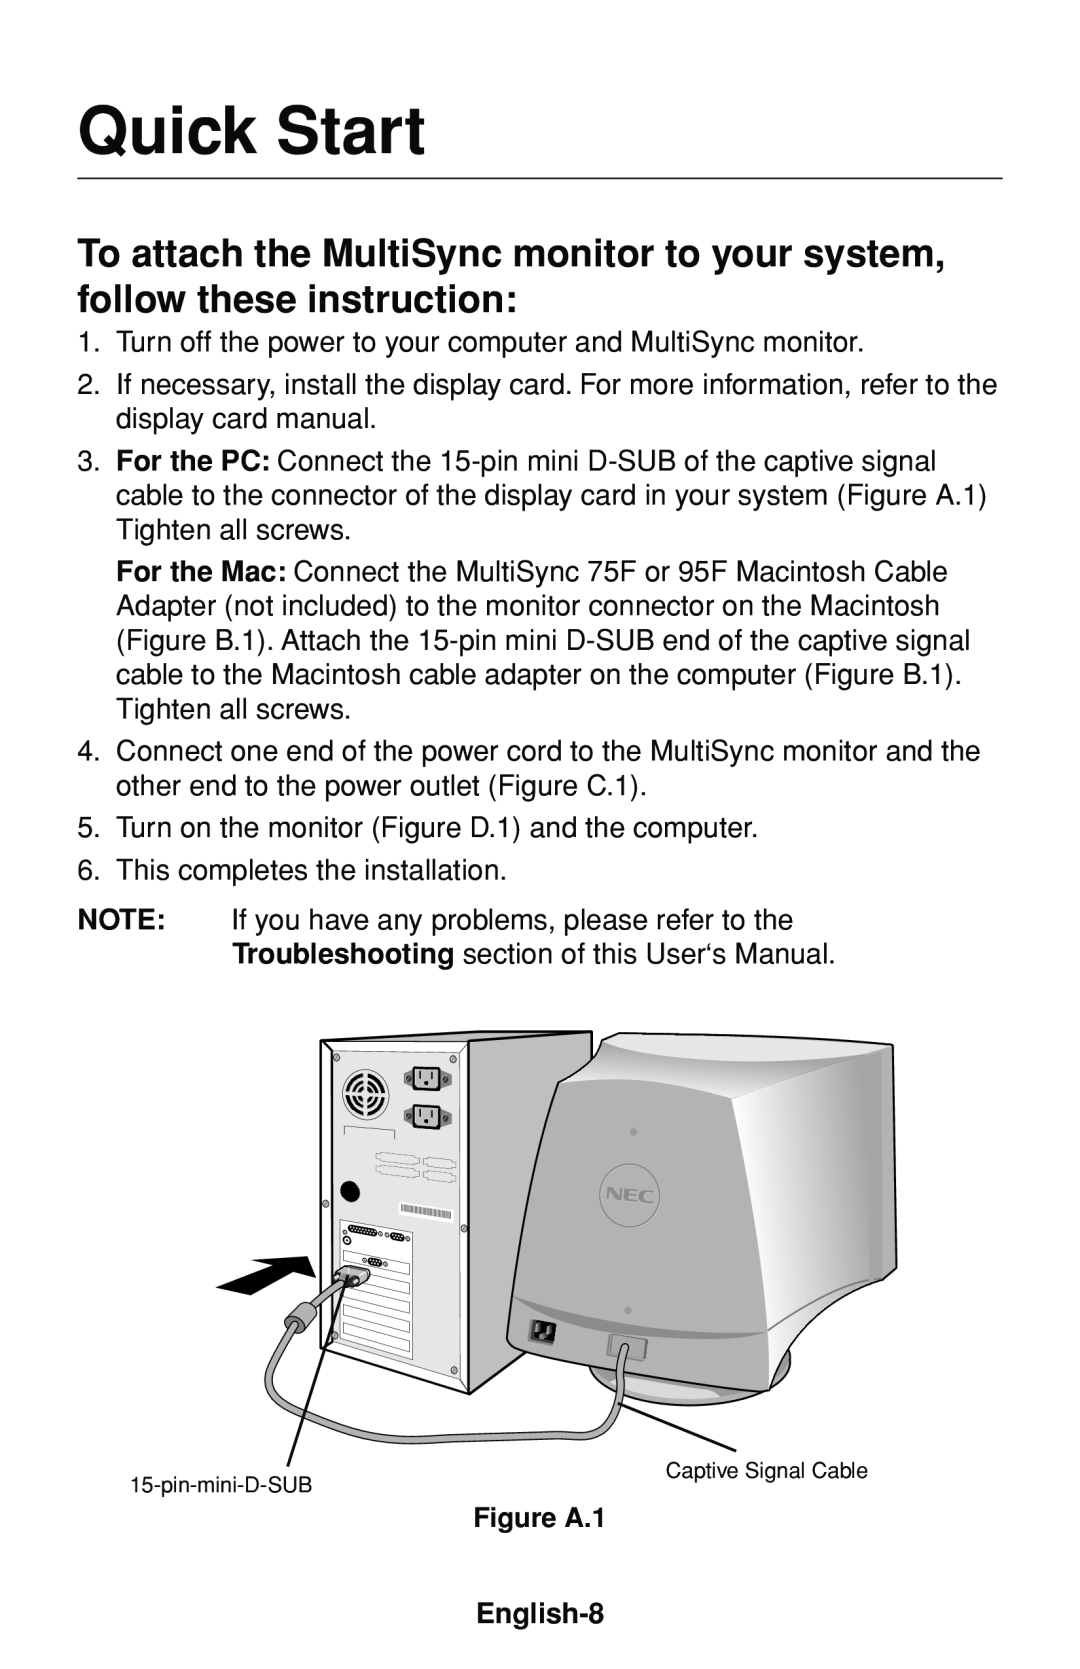 NEC MultiSync 75F user manual Quick Start, English-8 